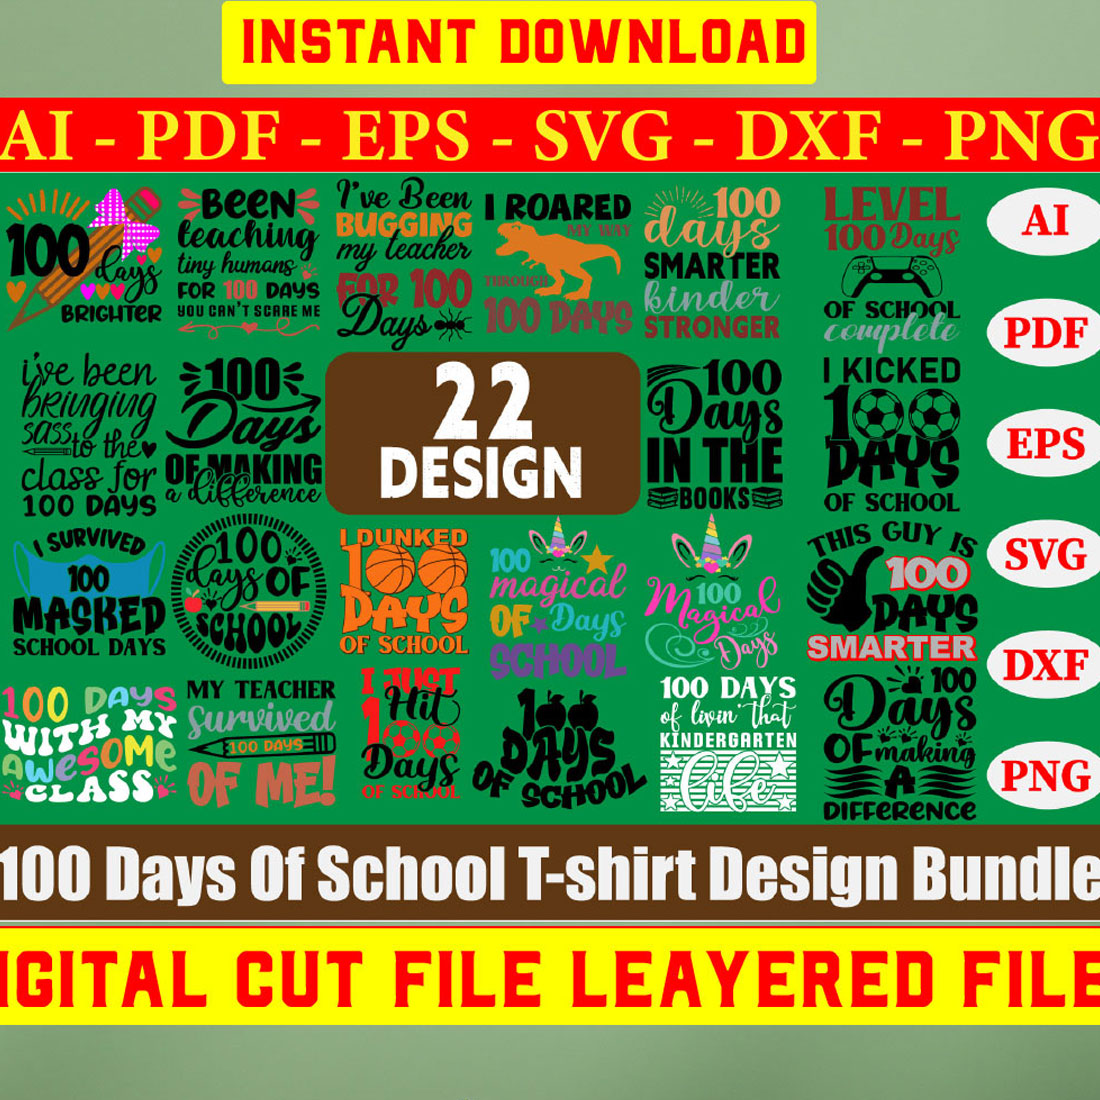 100 Days Of School T-shirt Design Bundle cover image.